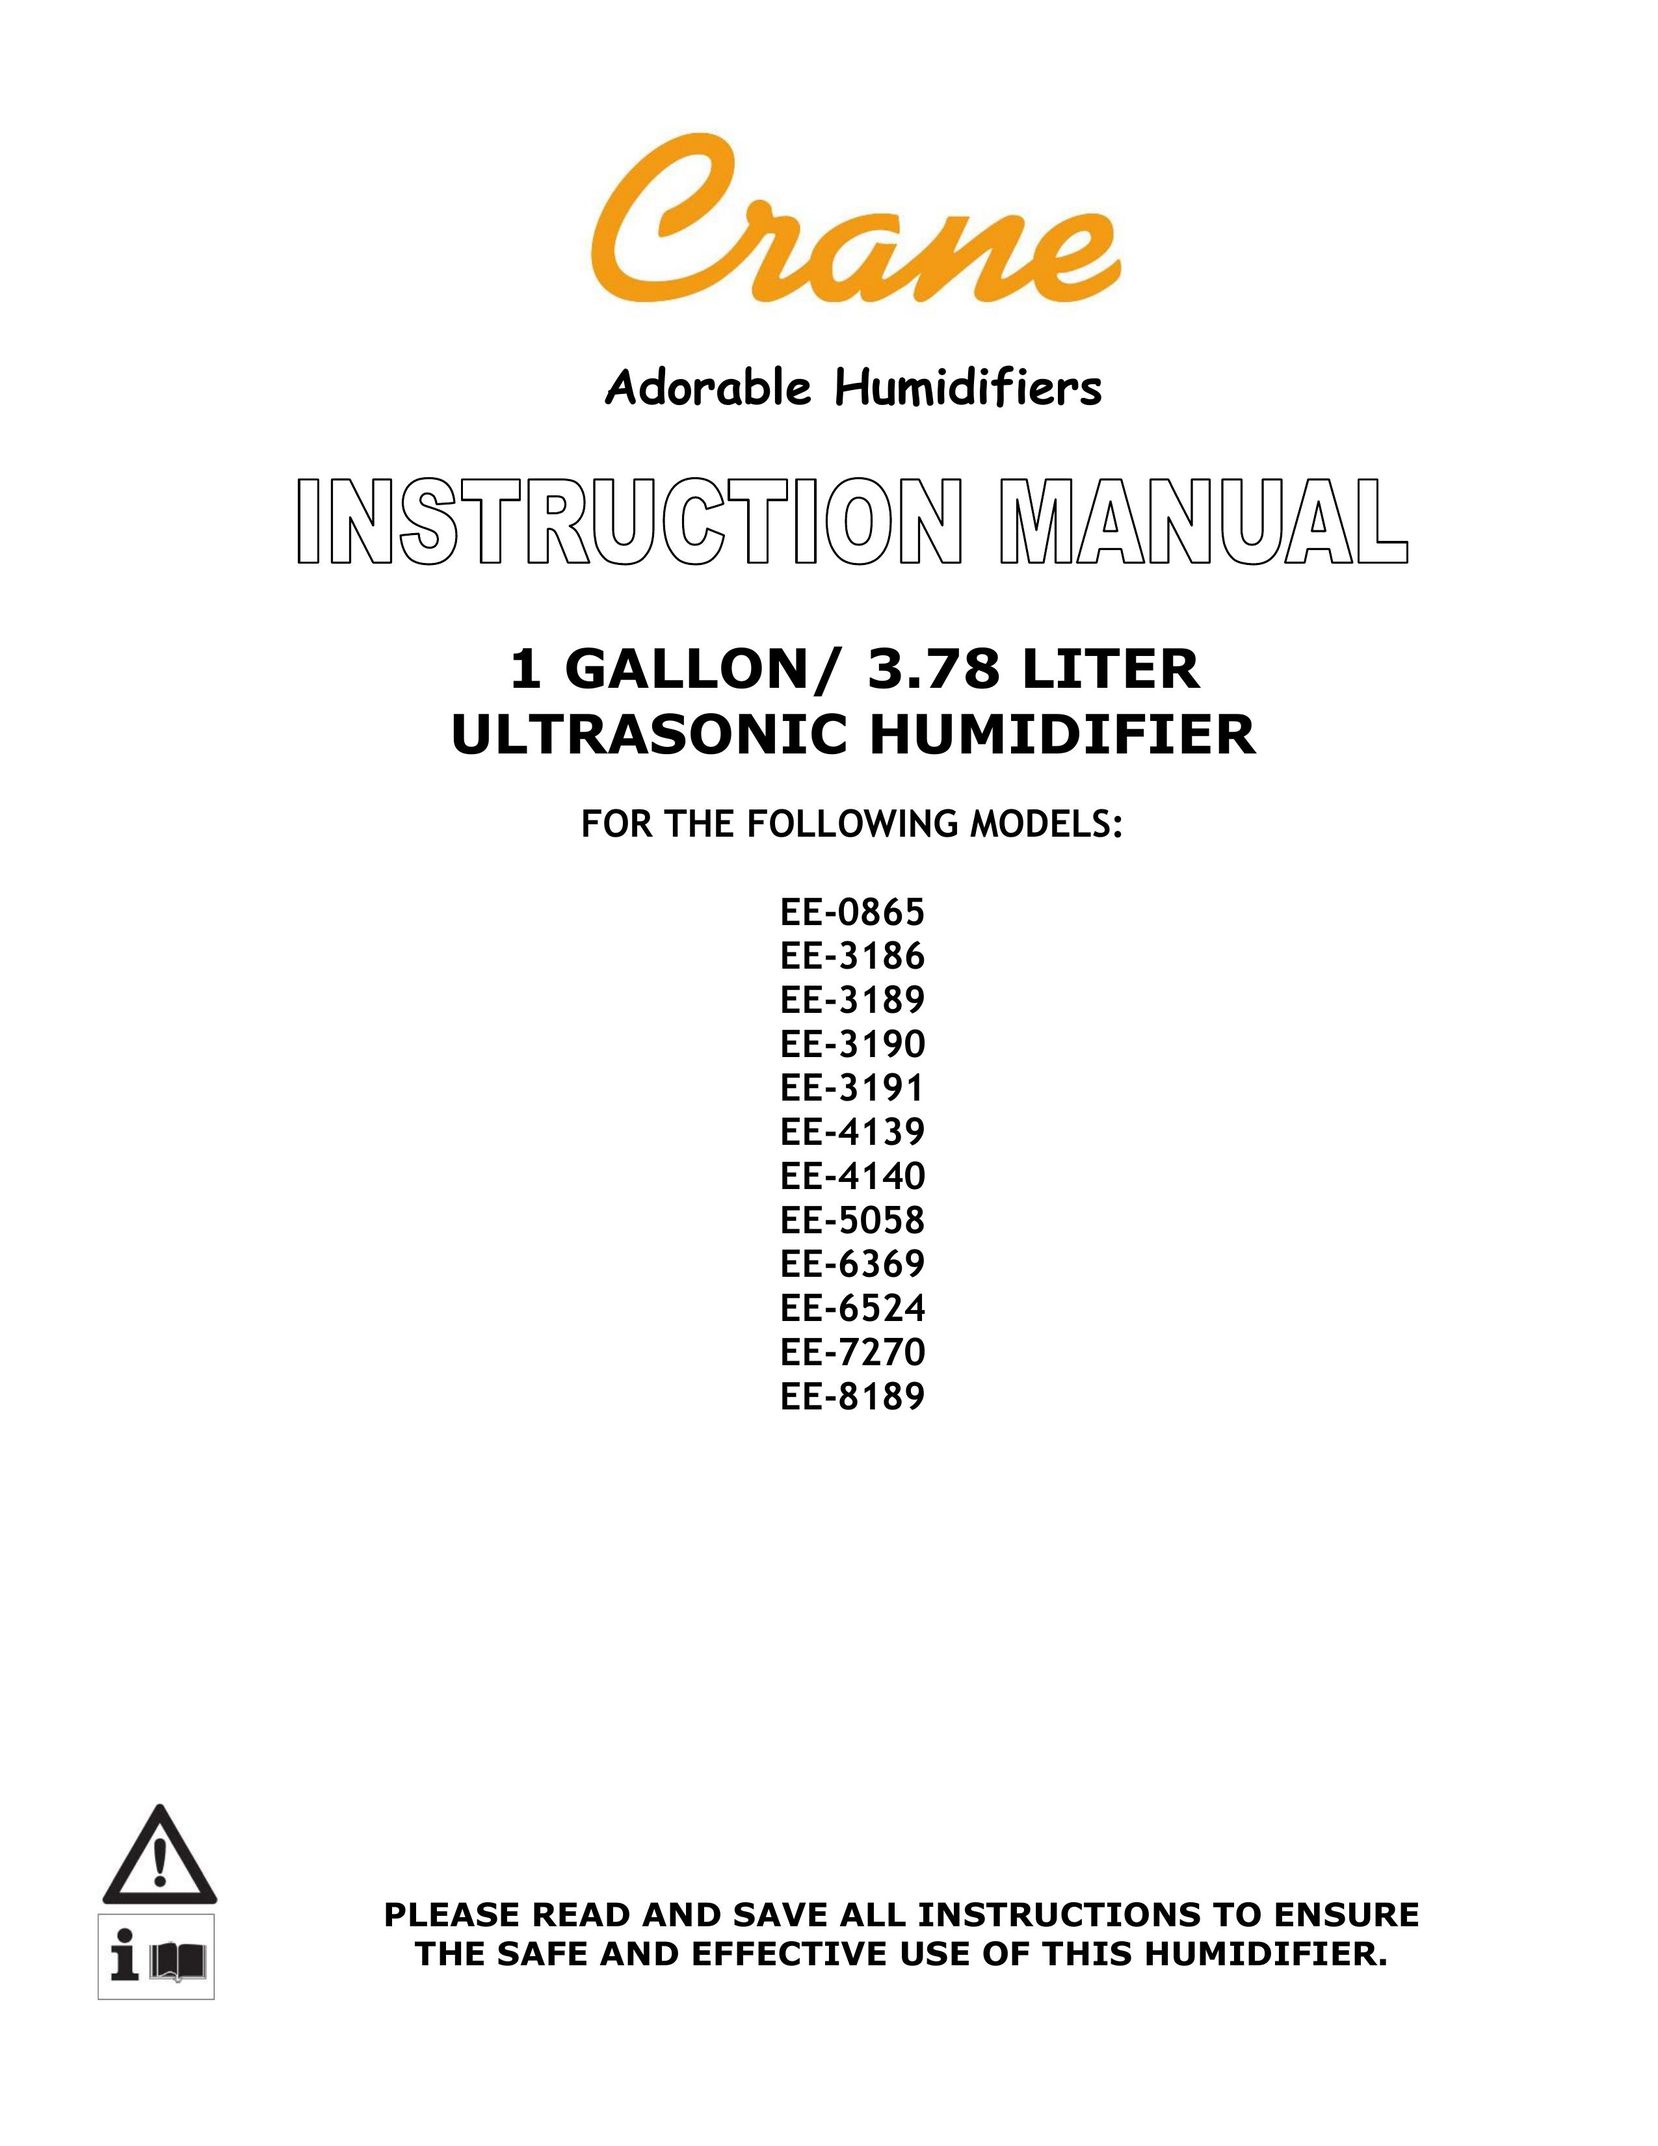 Crane EE-3186 Humidifier User Manual